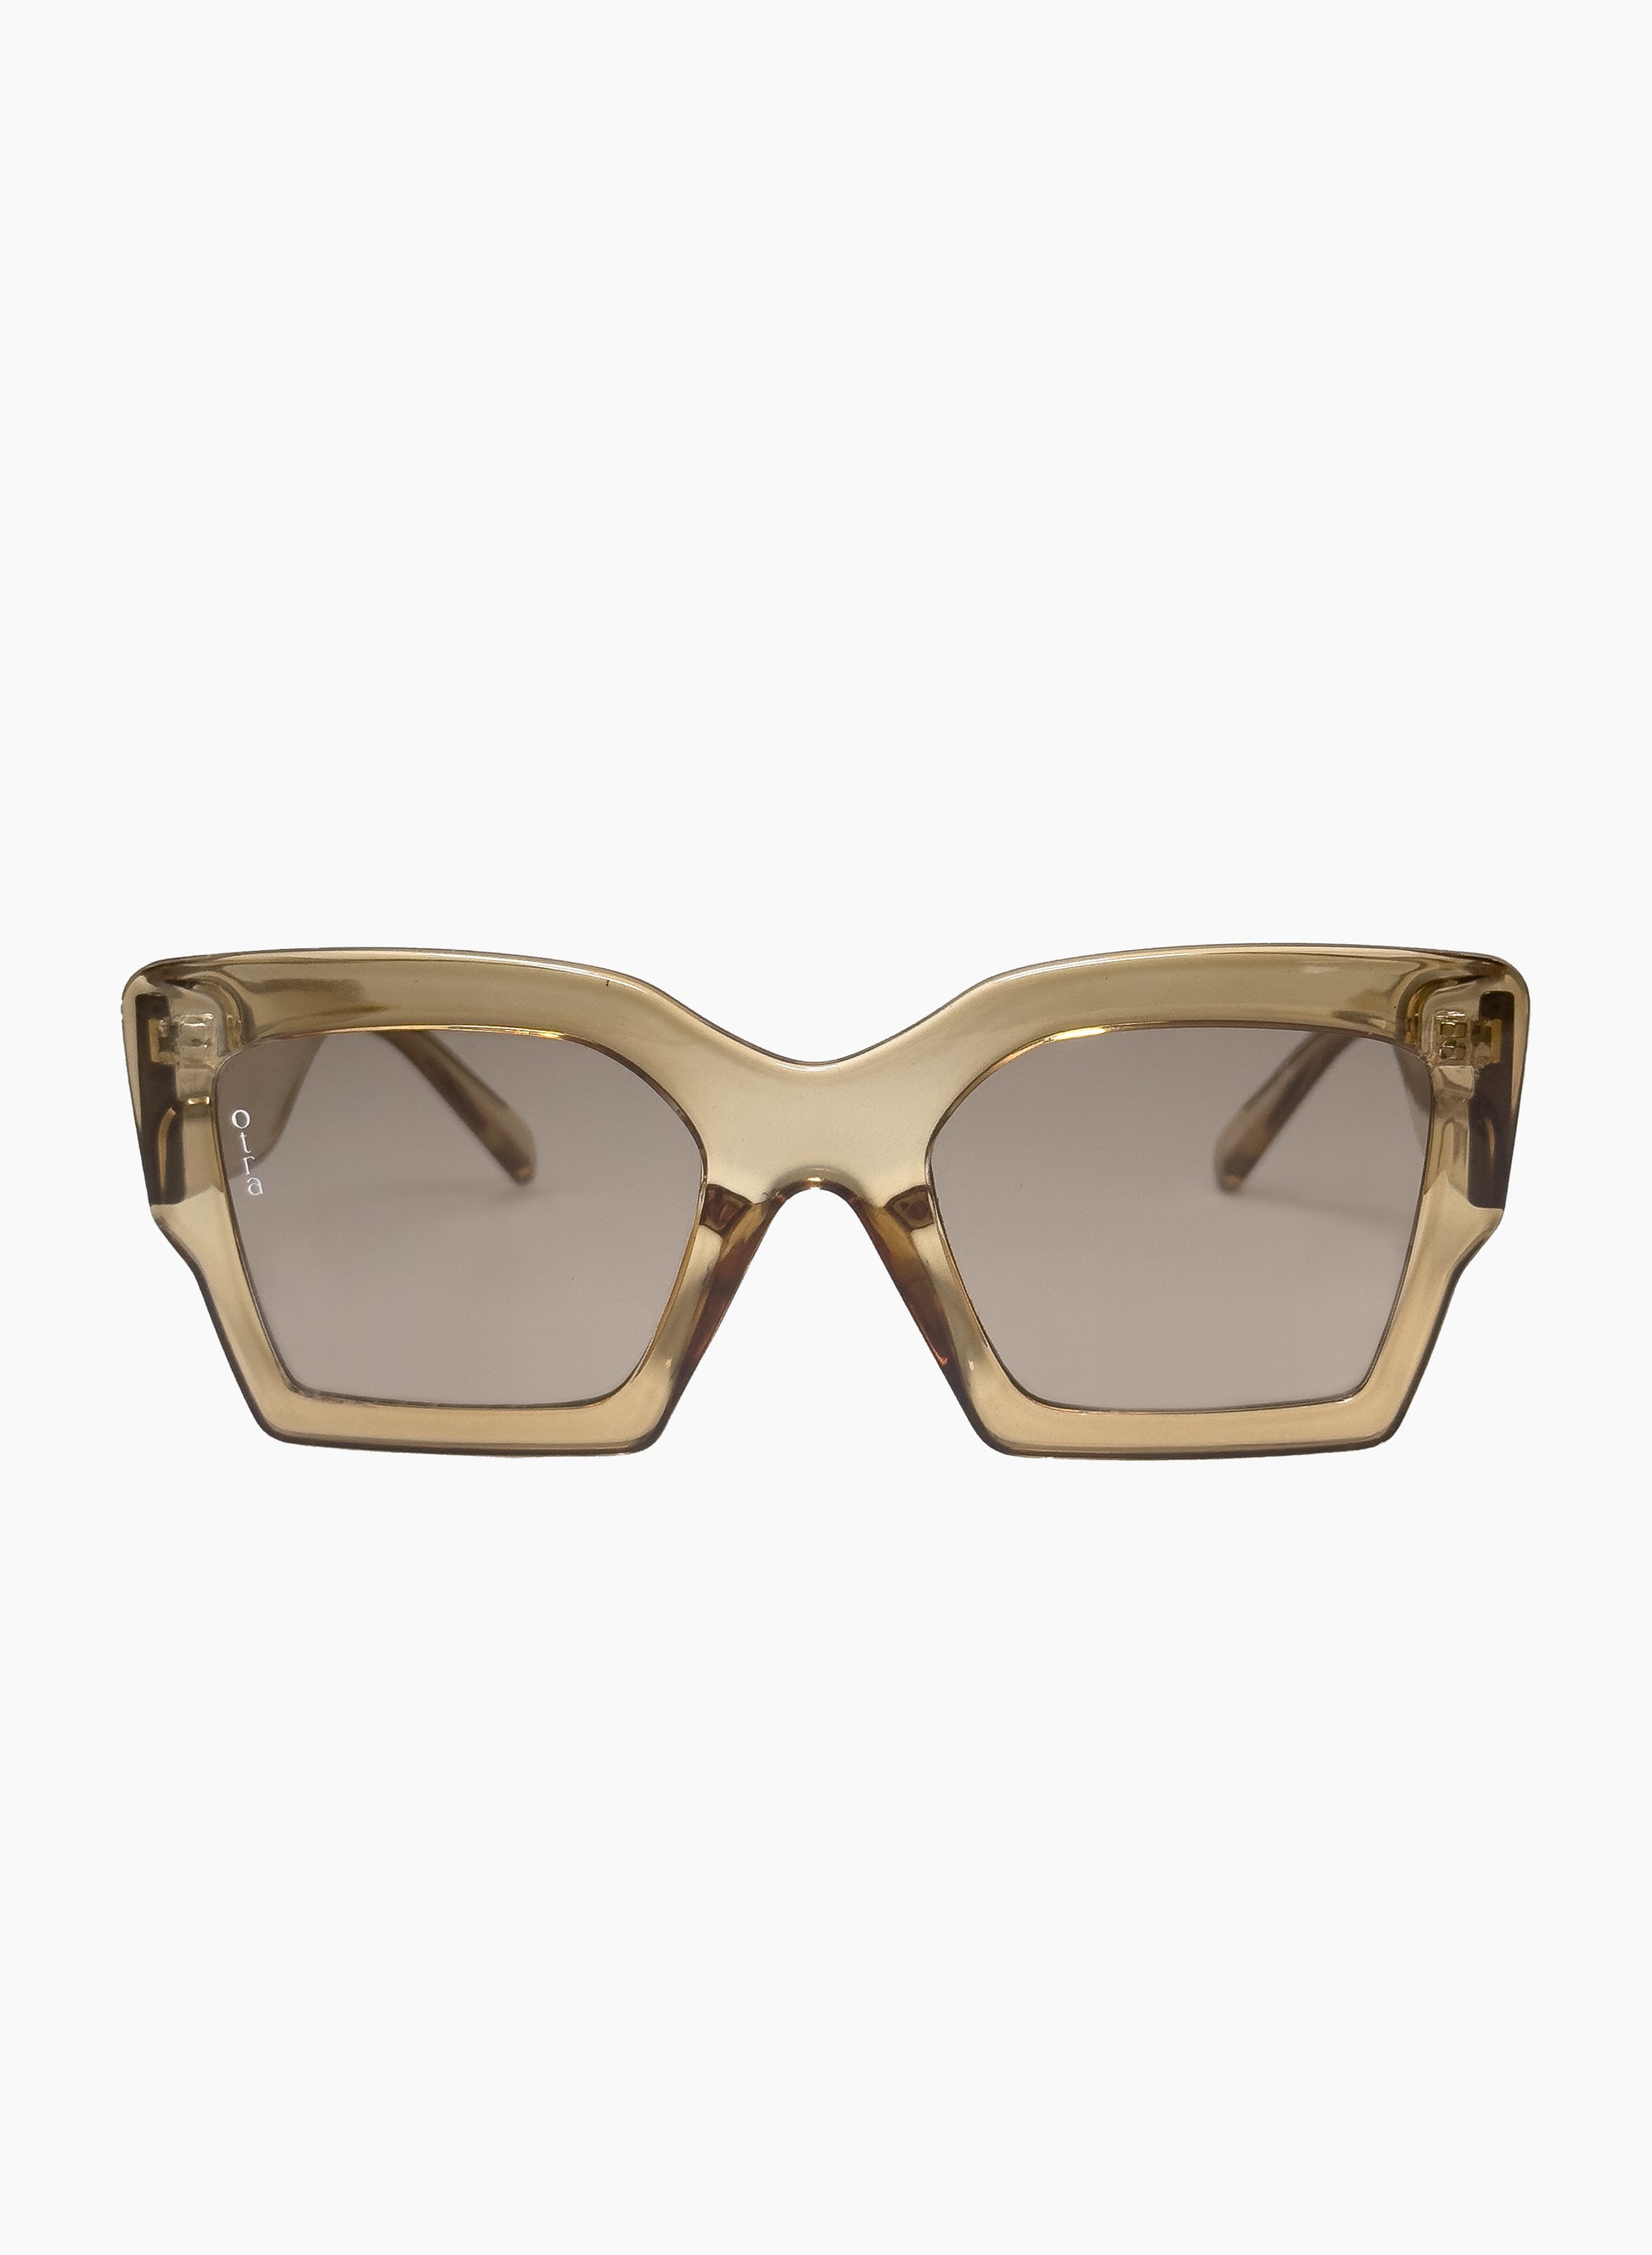 Pipa oversized cateye sunglasses in transparent gold